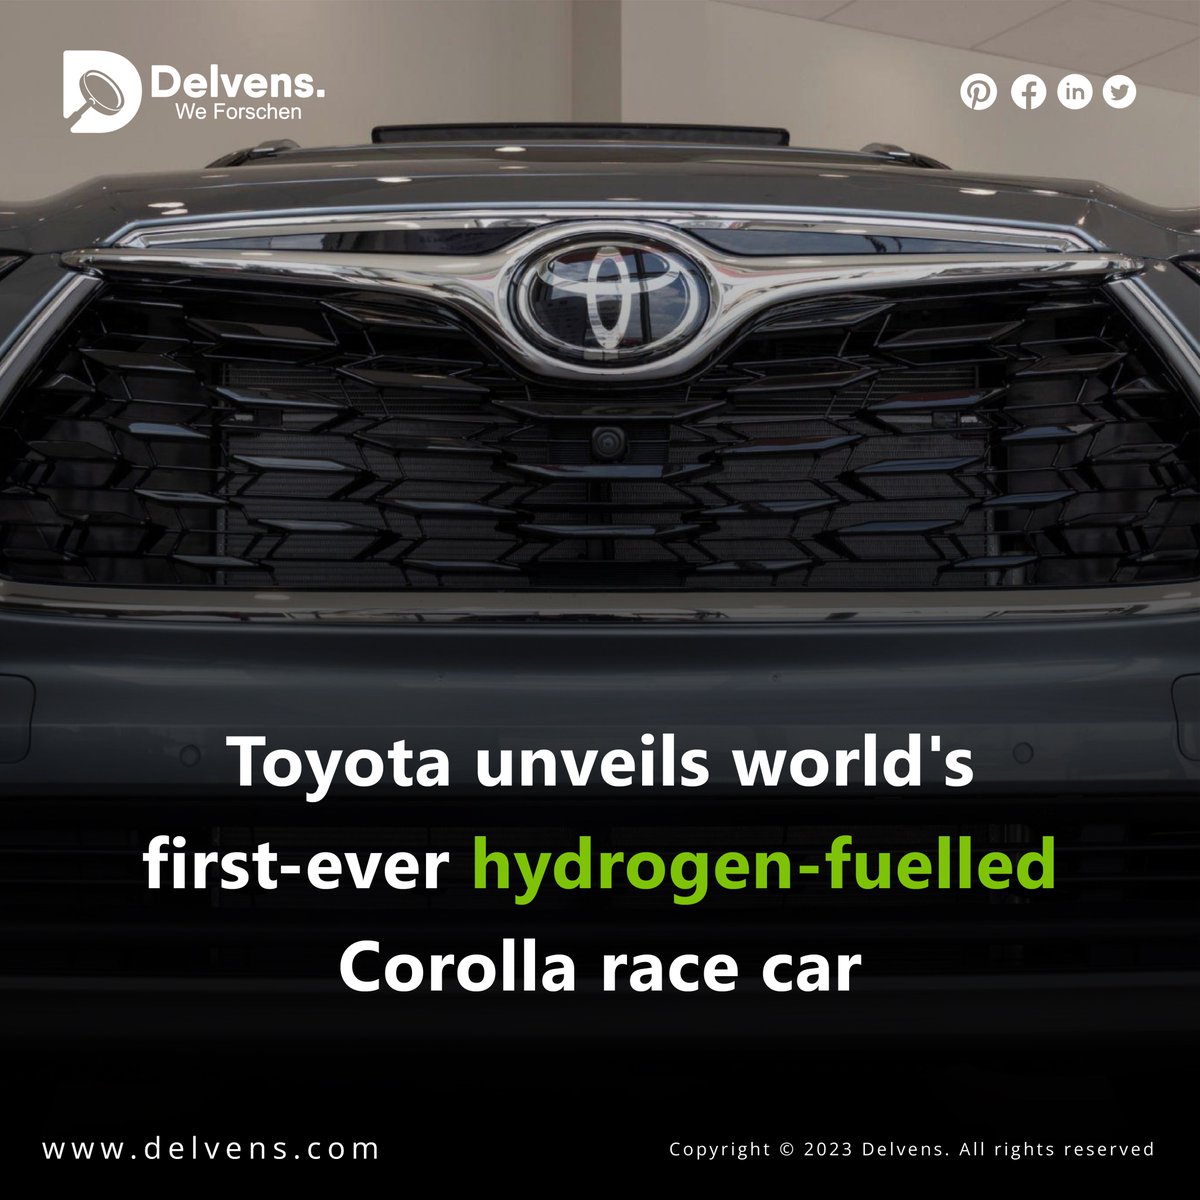 Toyota unveils world's first-ever hydrogen-fuelled Corolla race car  
#delvens #weforschen #strategicdecision #strategicmanagement #power #oil #electricvehicles #naturalgas #alternativeenergy #hydrogen #racecar